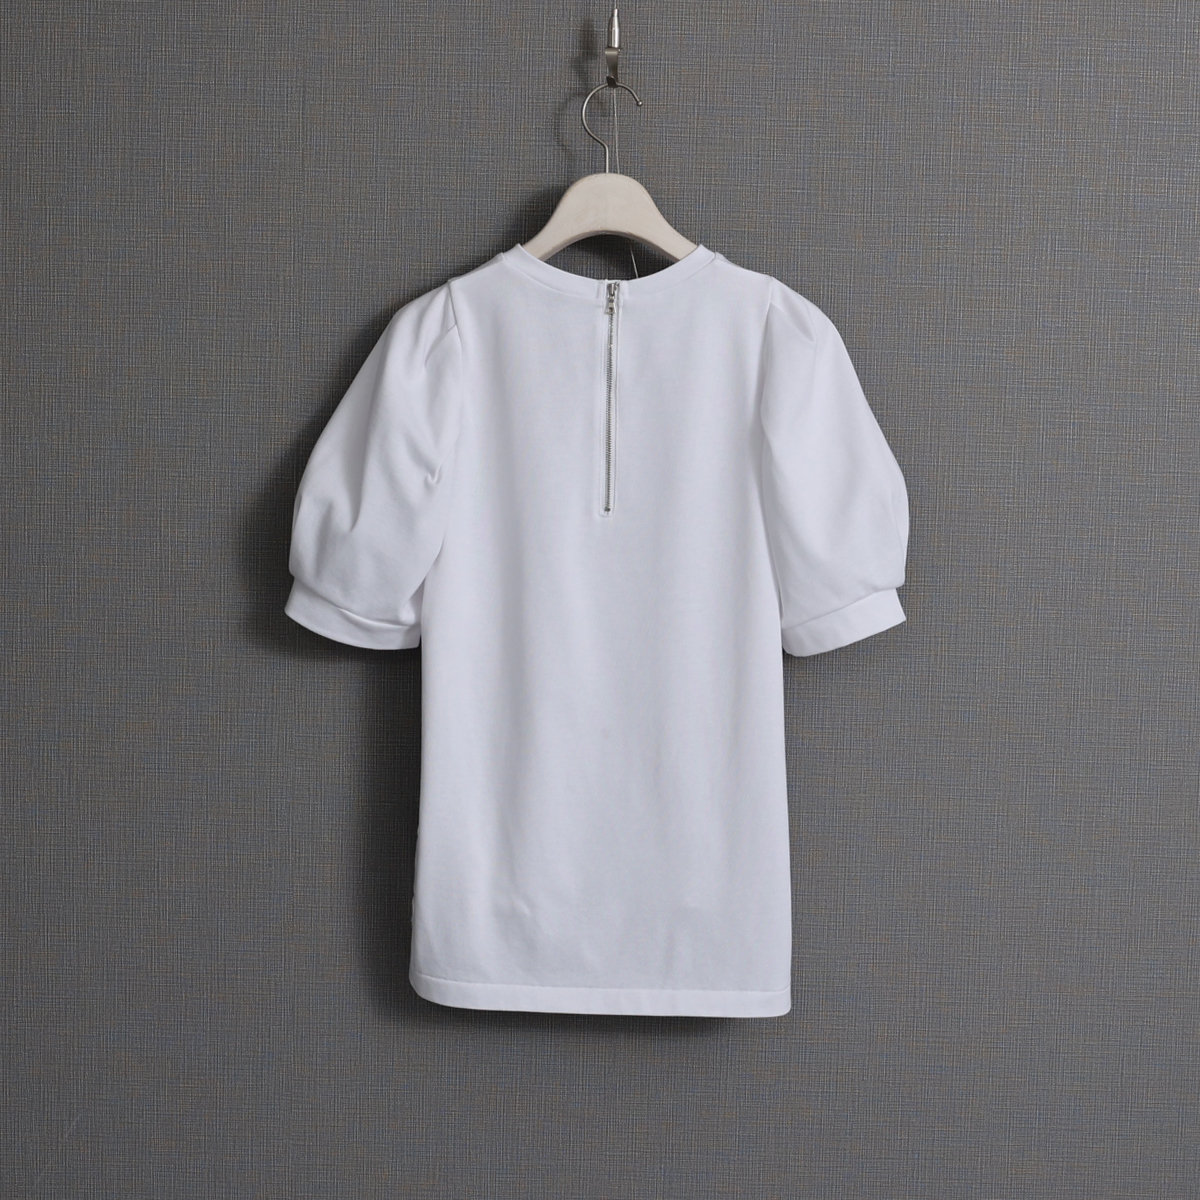 『Suvin cotton』 puff sleeve tops WHITE画像